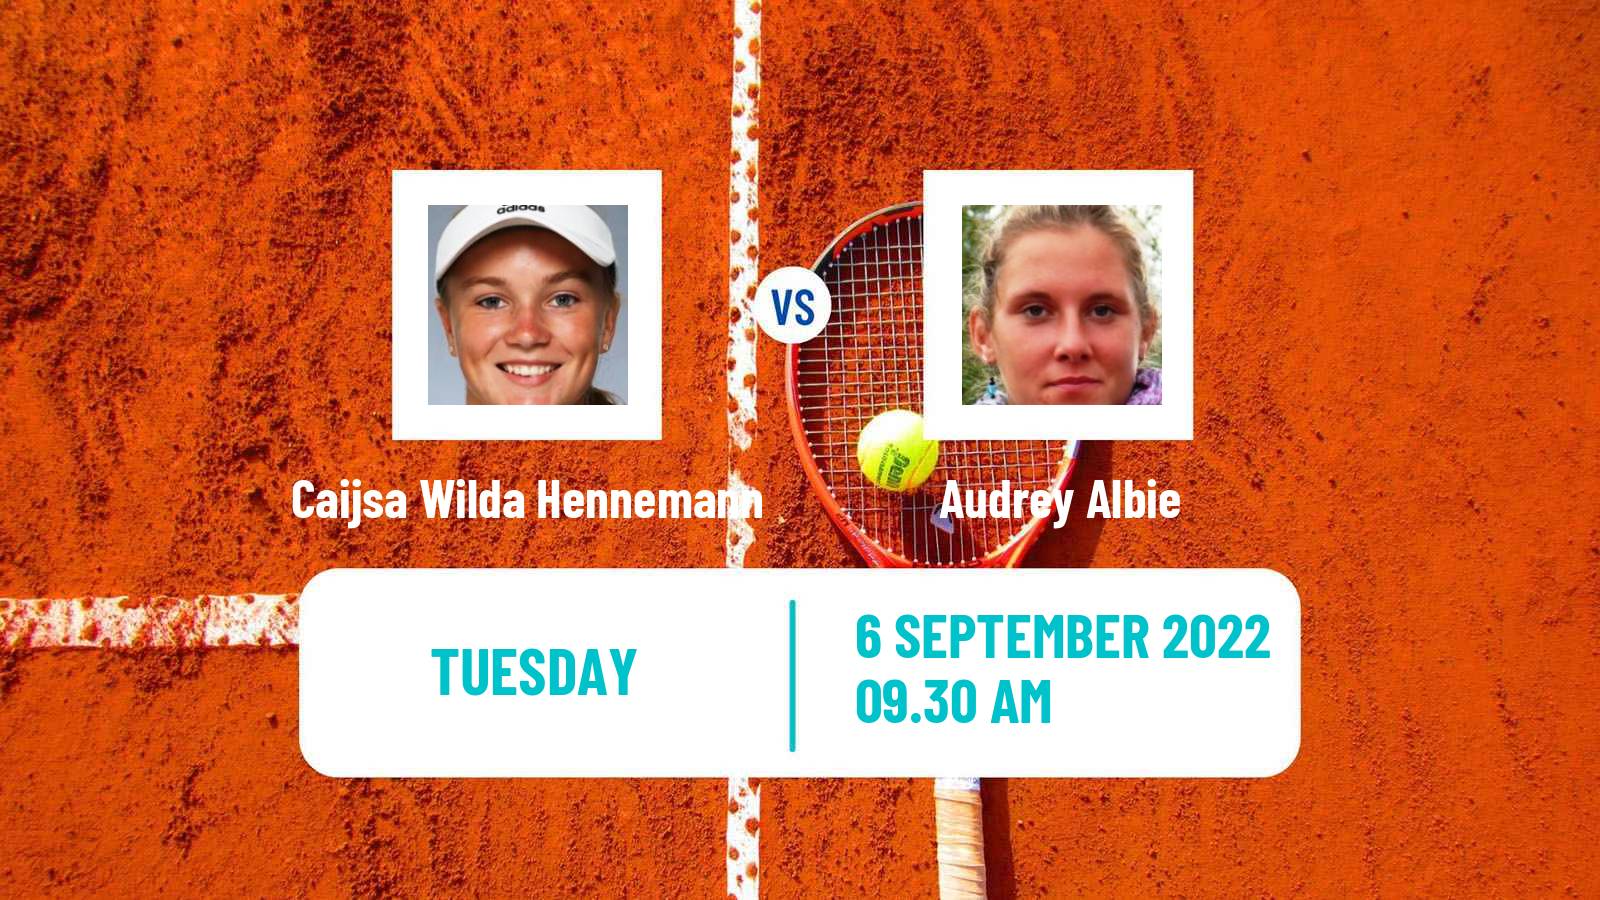 Tennis ITF Tournaments Caijsa Wilda Hennemann - Audrey Albie